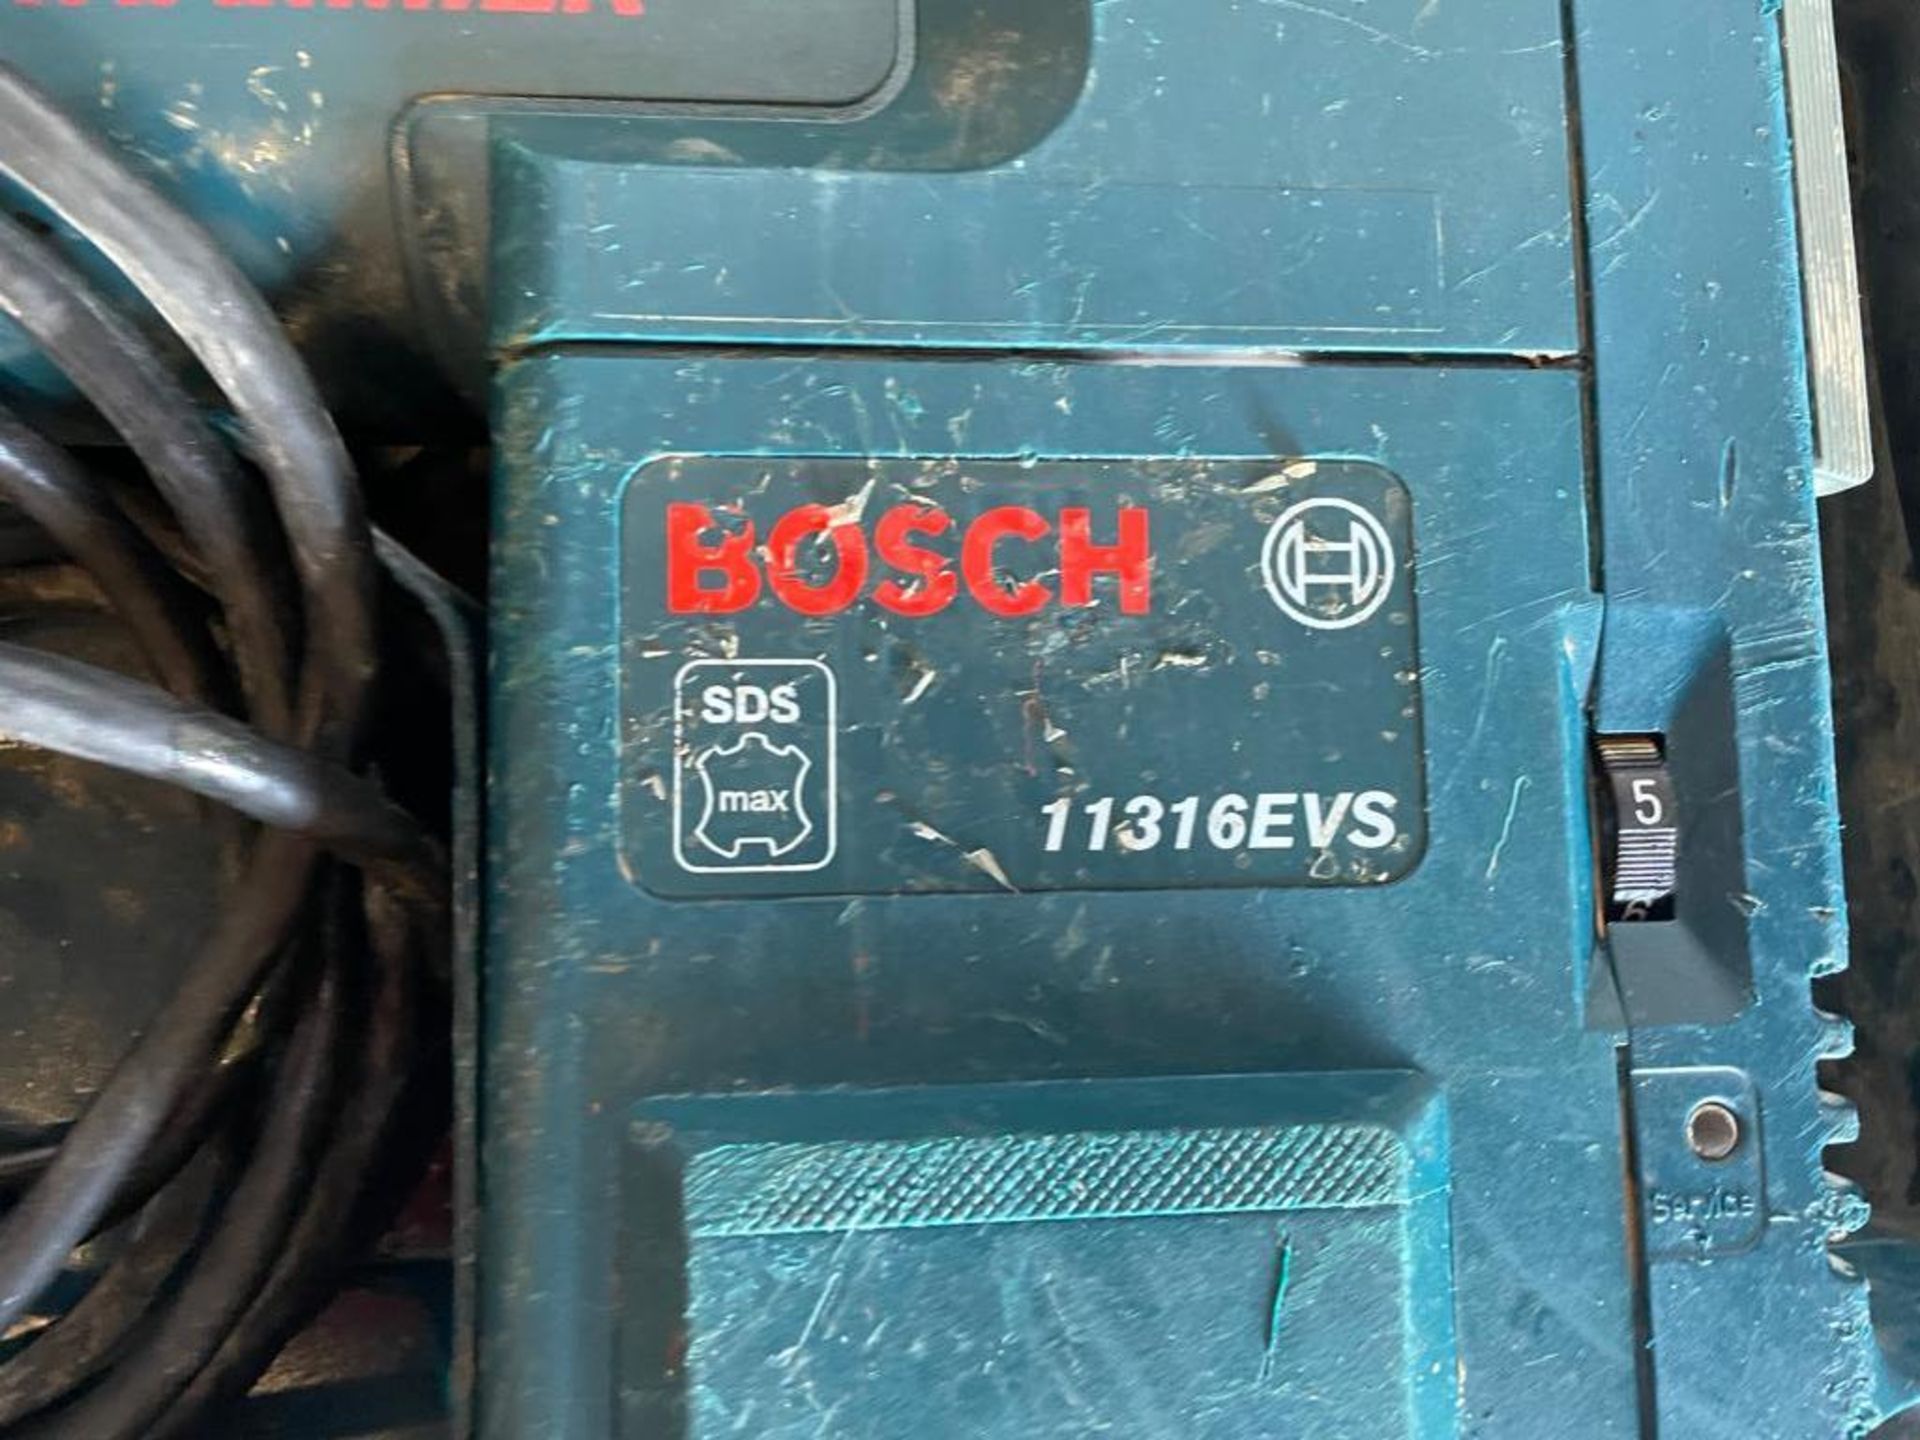 Bosch 11316EVS SDS Max Demolition Hammer, 120V in Case. Located in Hazelwood, MO - Image 3 of 5